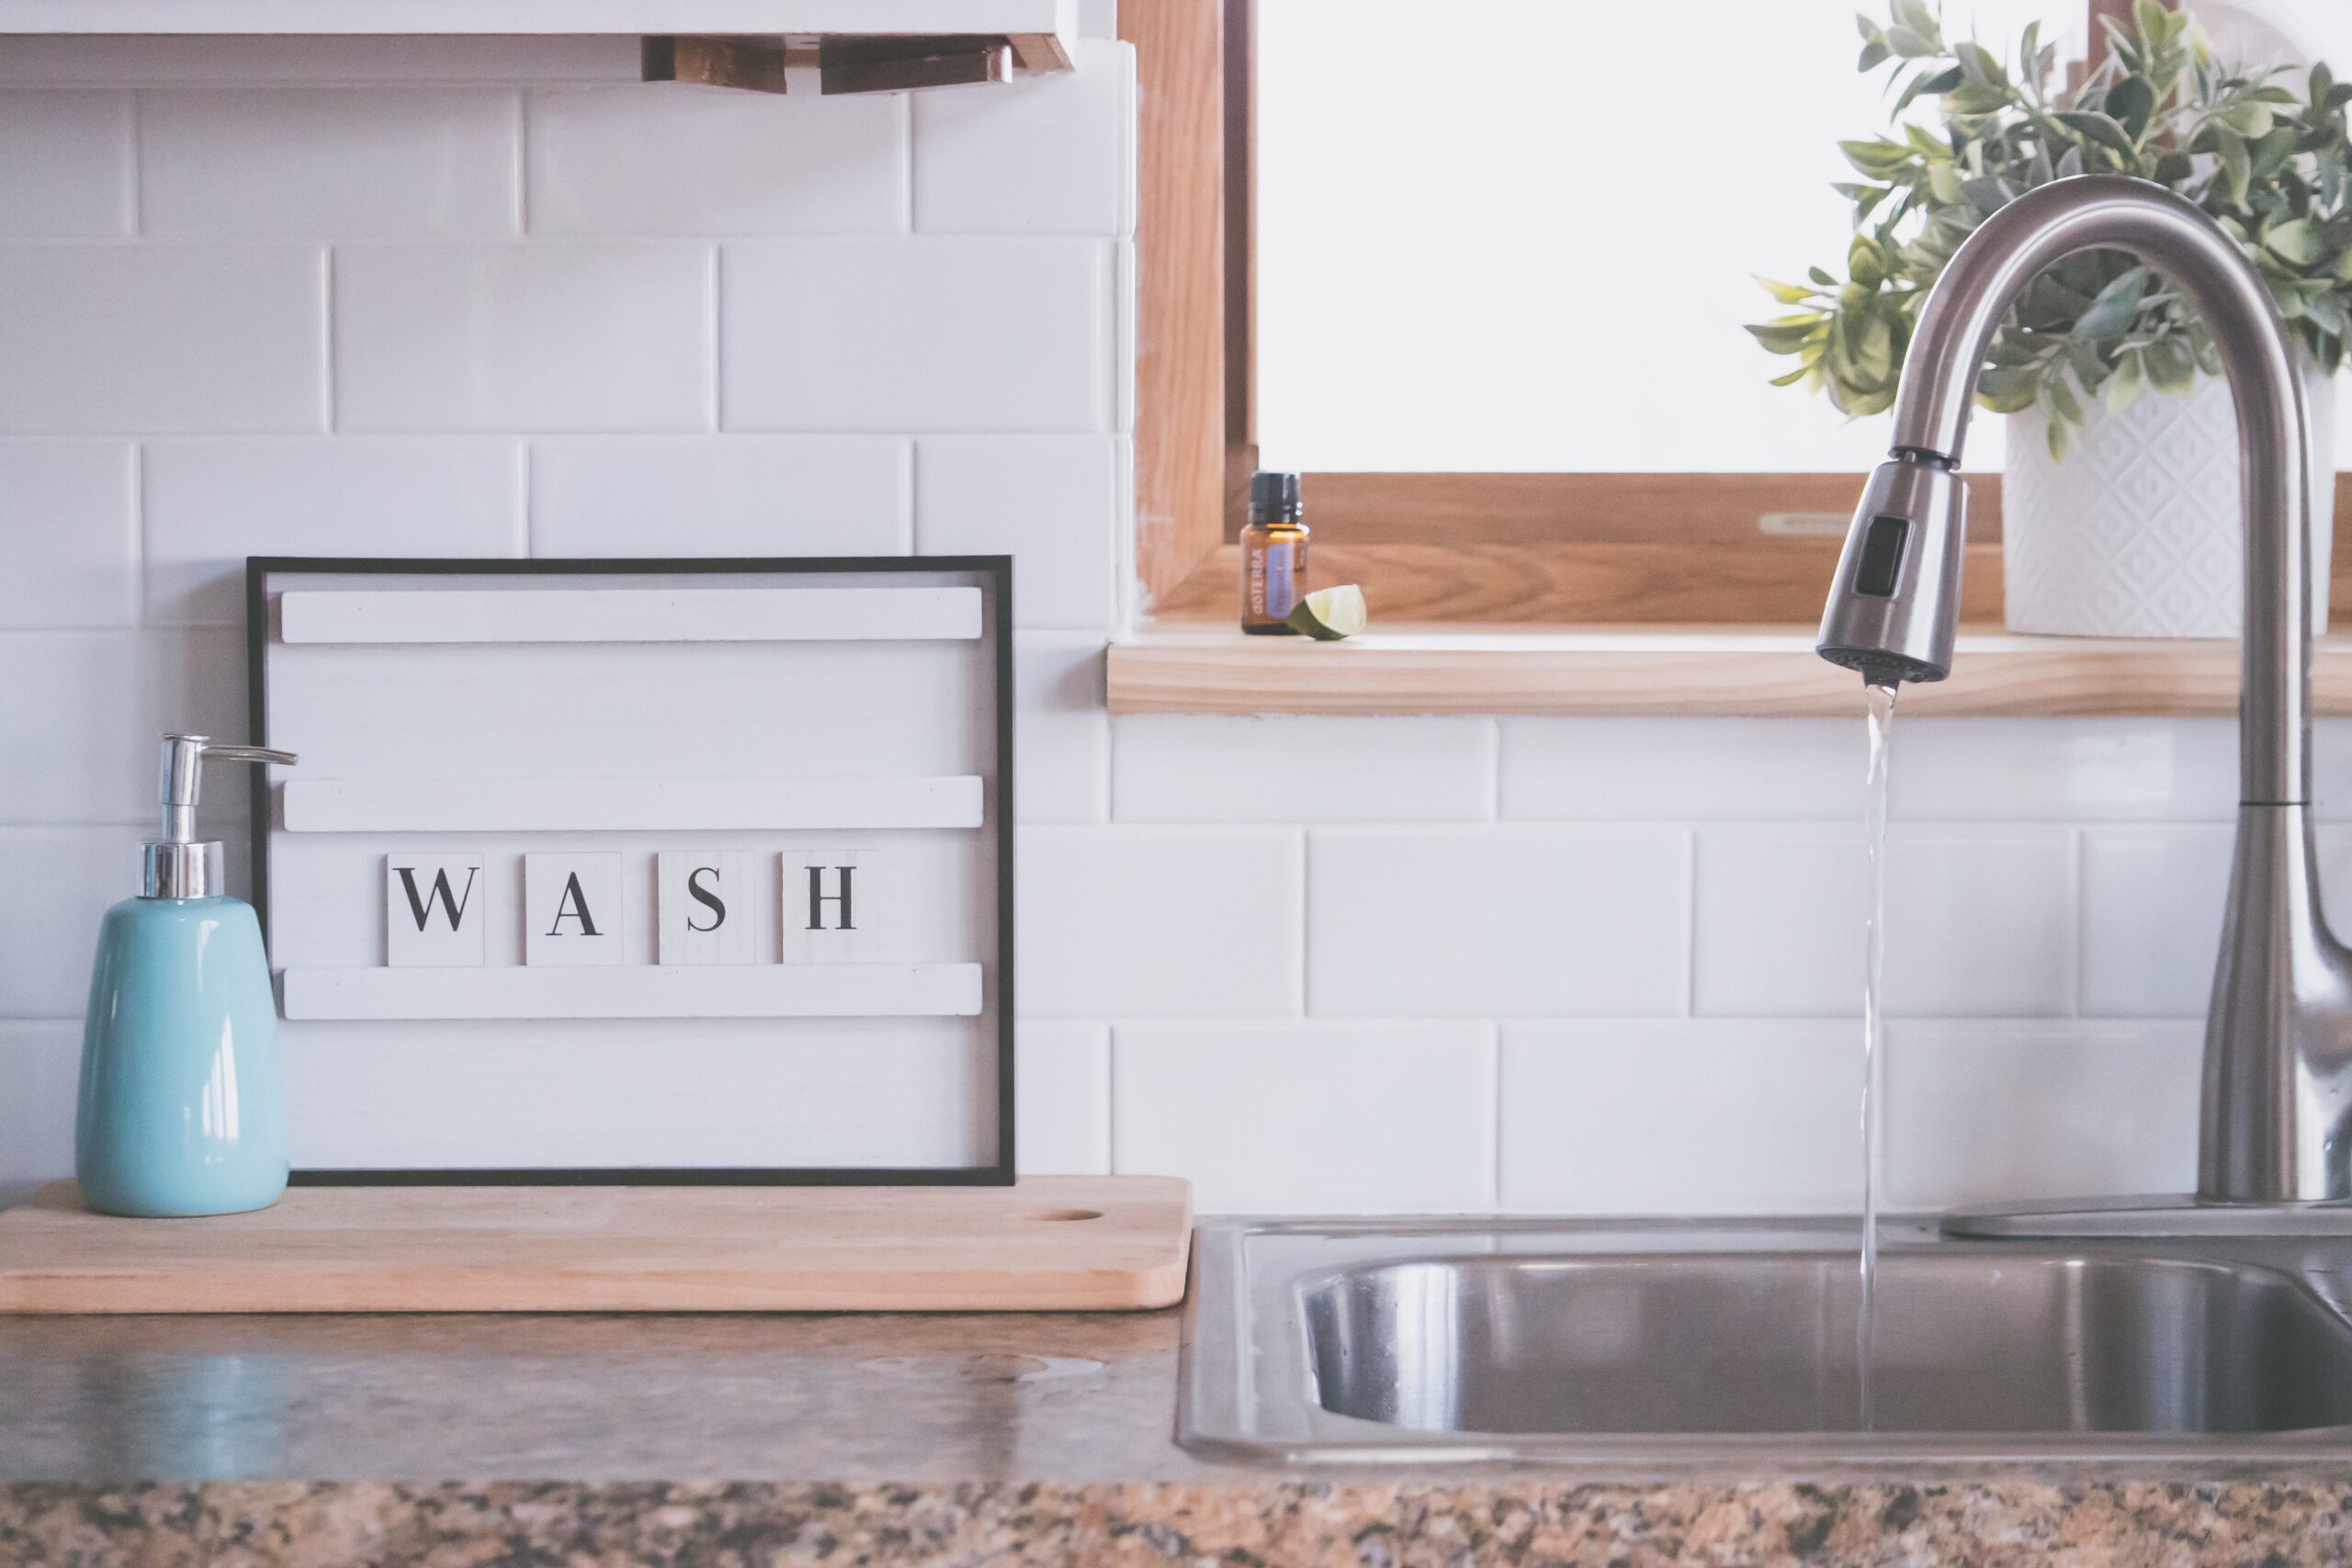 how to wash granite countertops